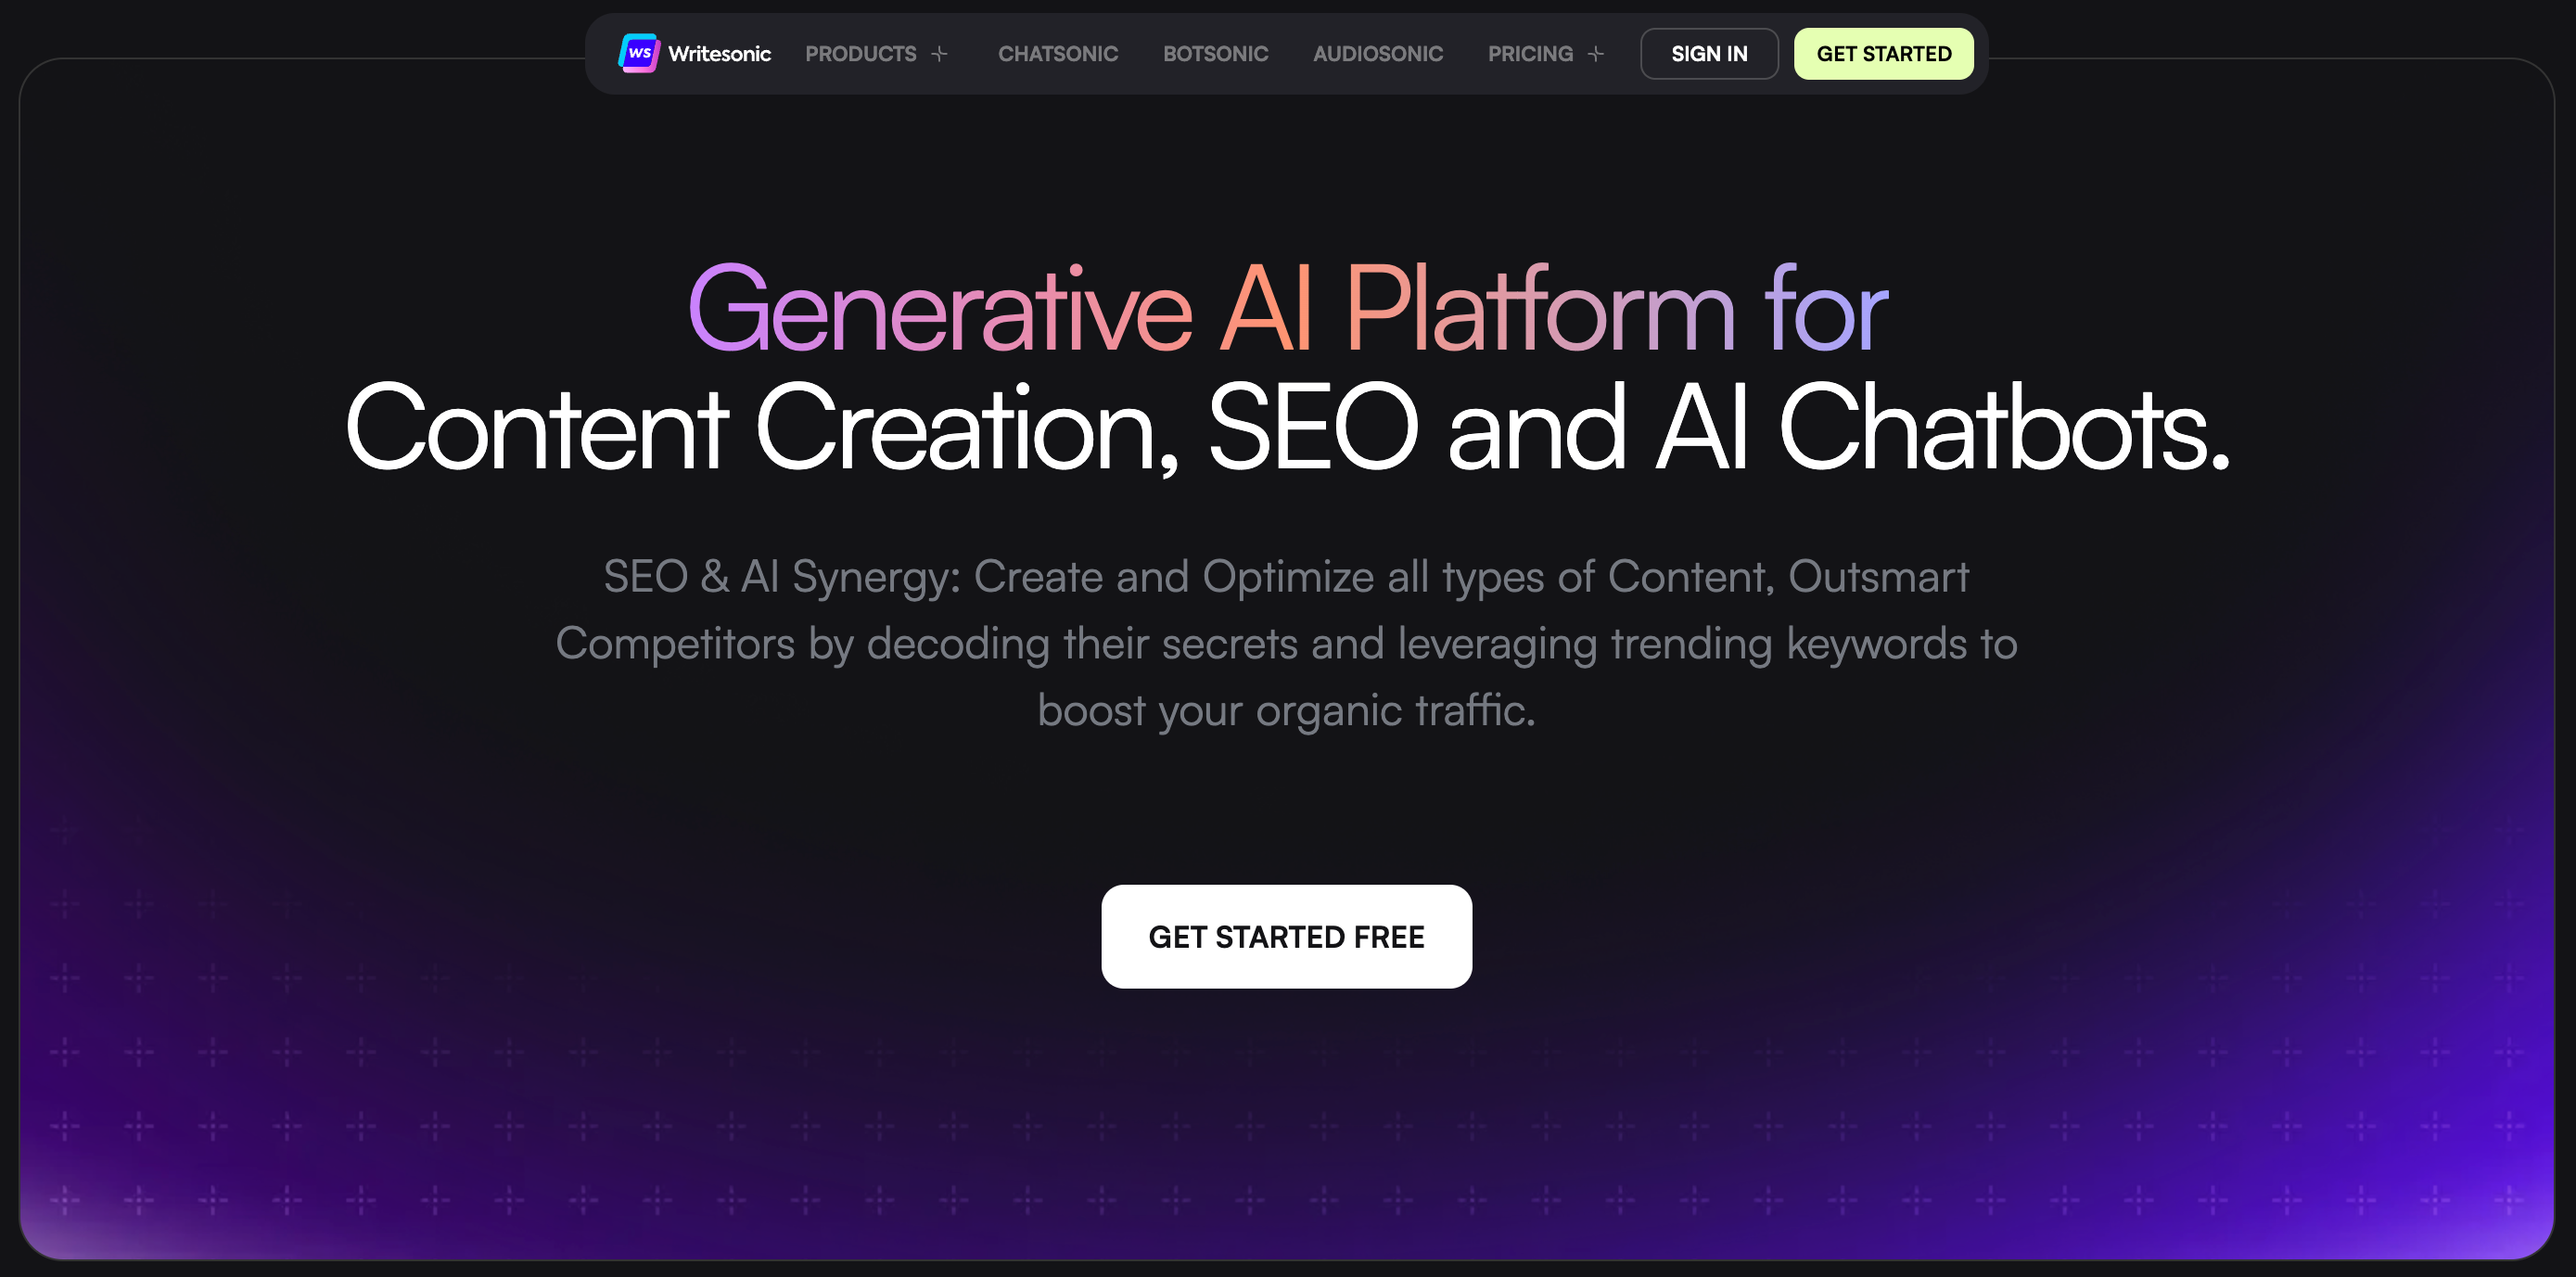 Generative AI platform for content creation, SEO, and AI chatbots